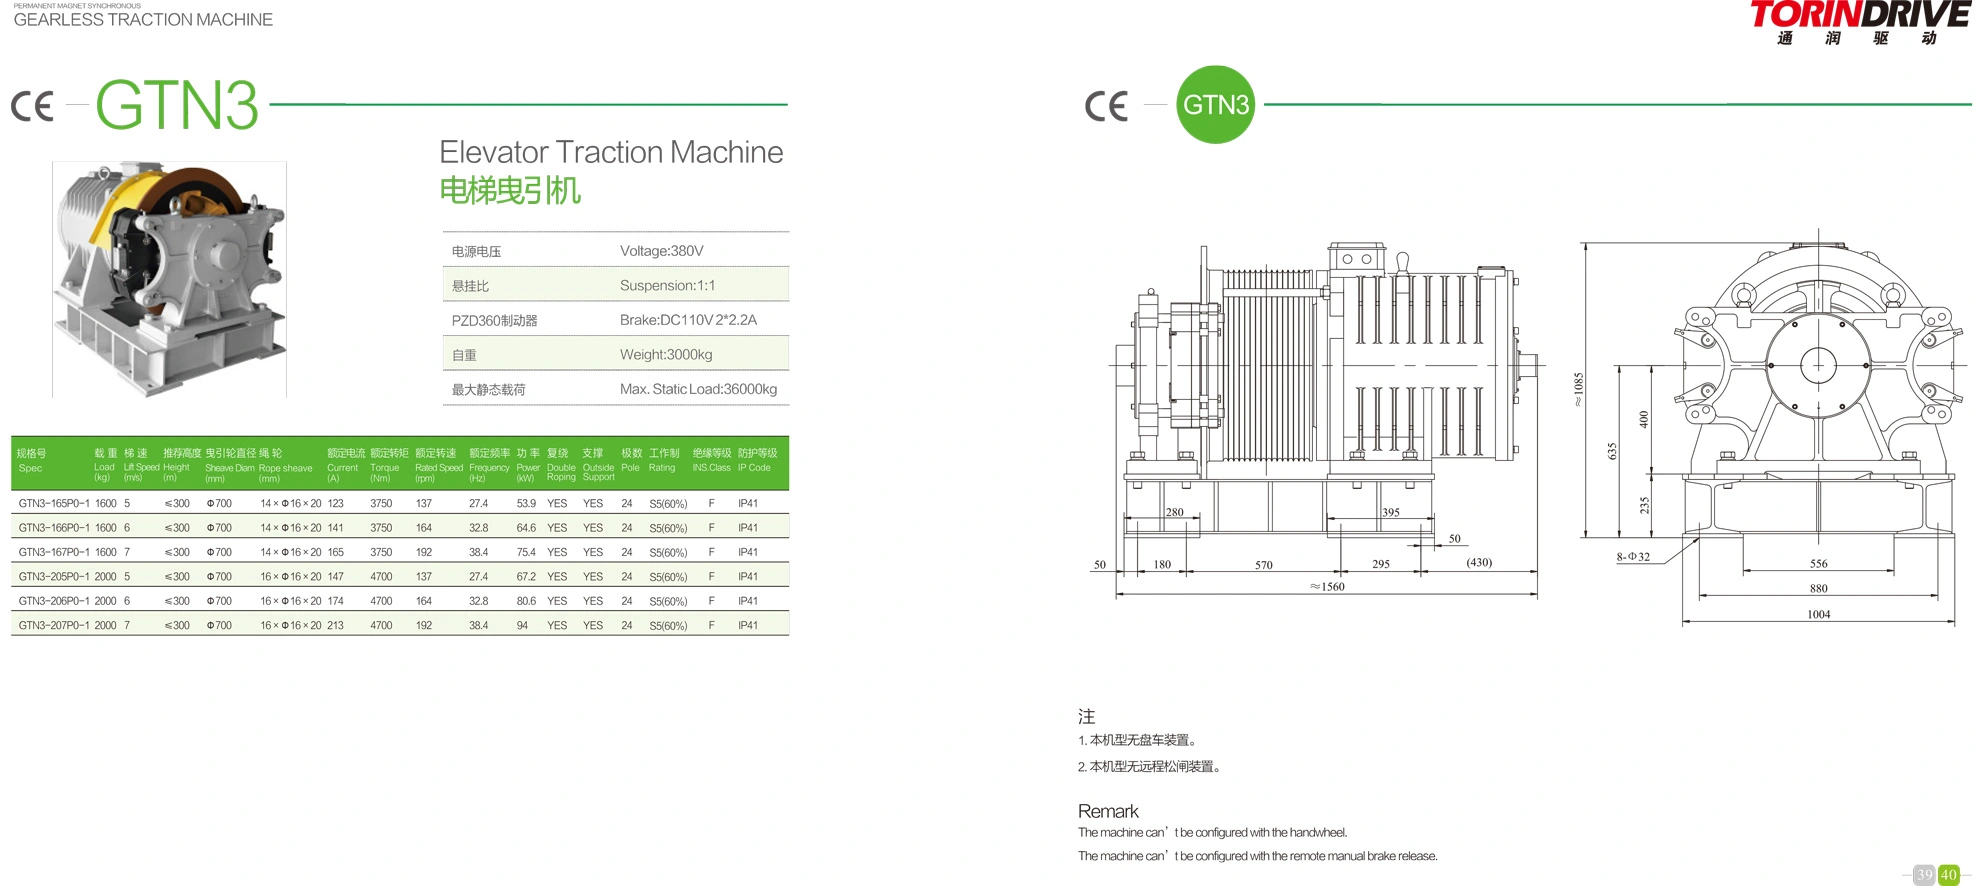 TORINDRIVE Elevator Gearless Traction Machine GTN3 SPECIFICATION